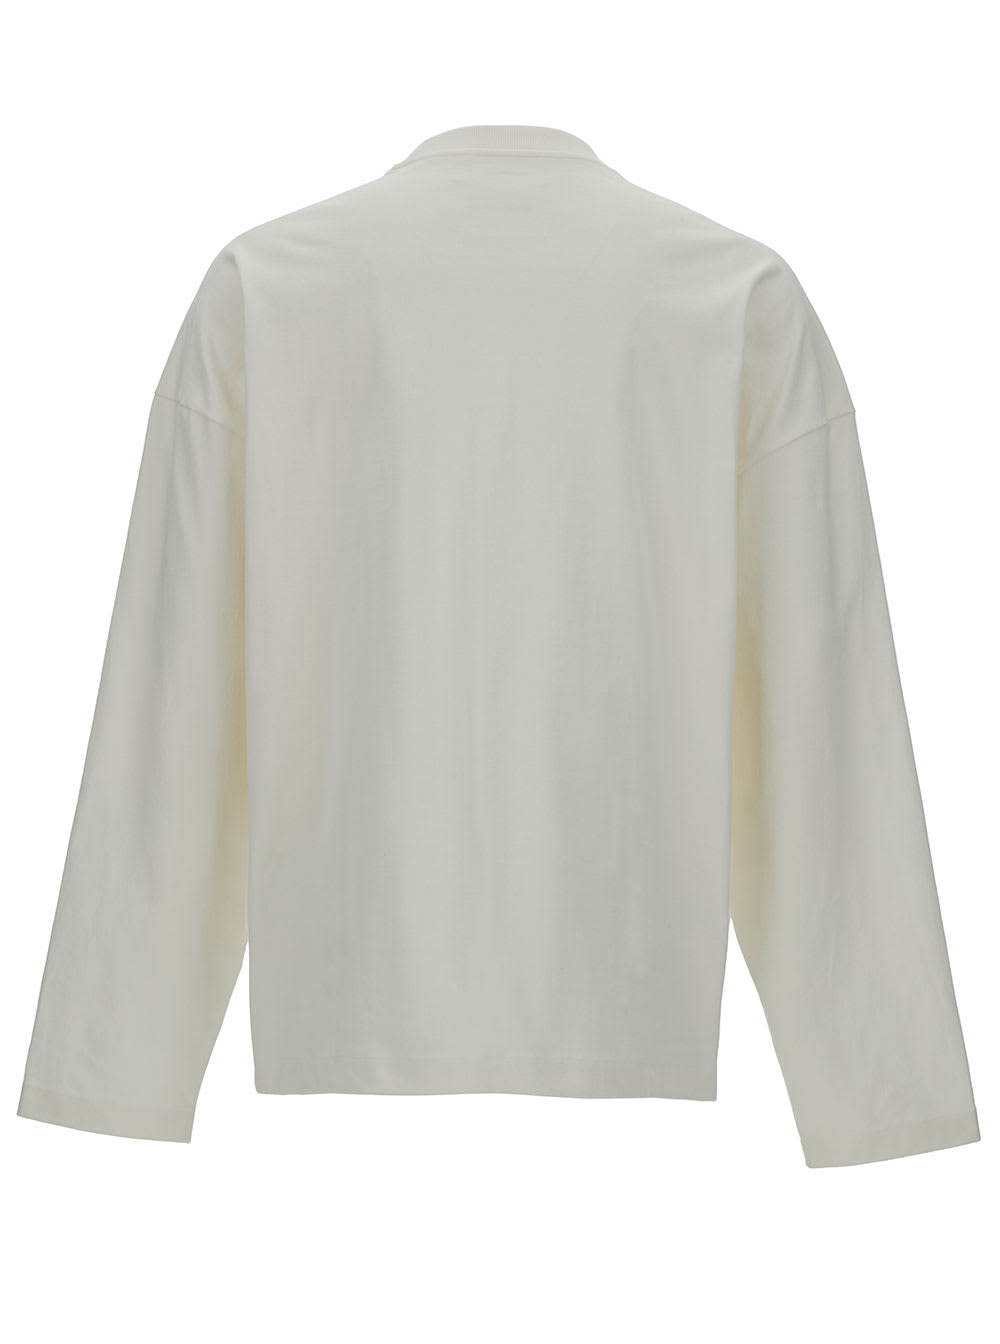 Shop Jil Sander White Long Sleeve T-shirt With Contrasting Logo Print In Lightweight Cotton Man